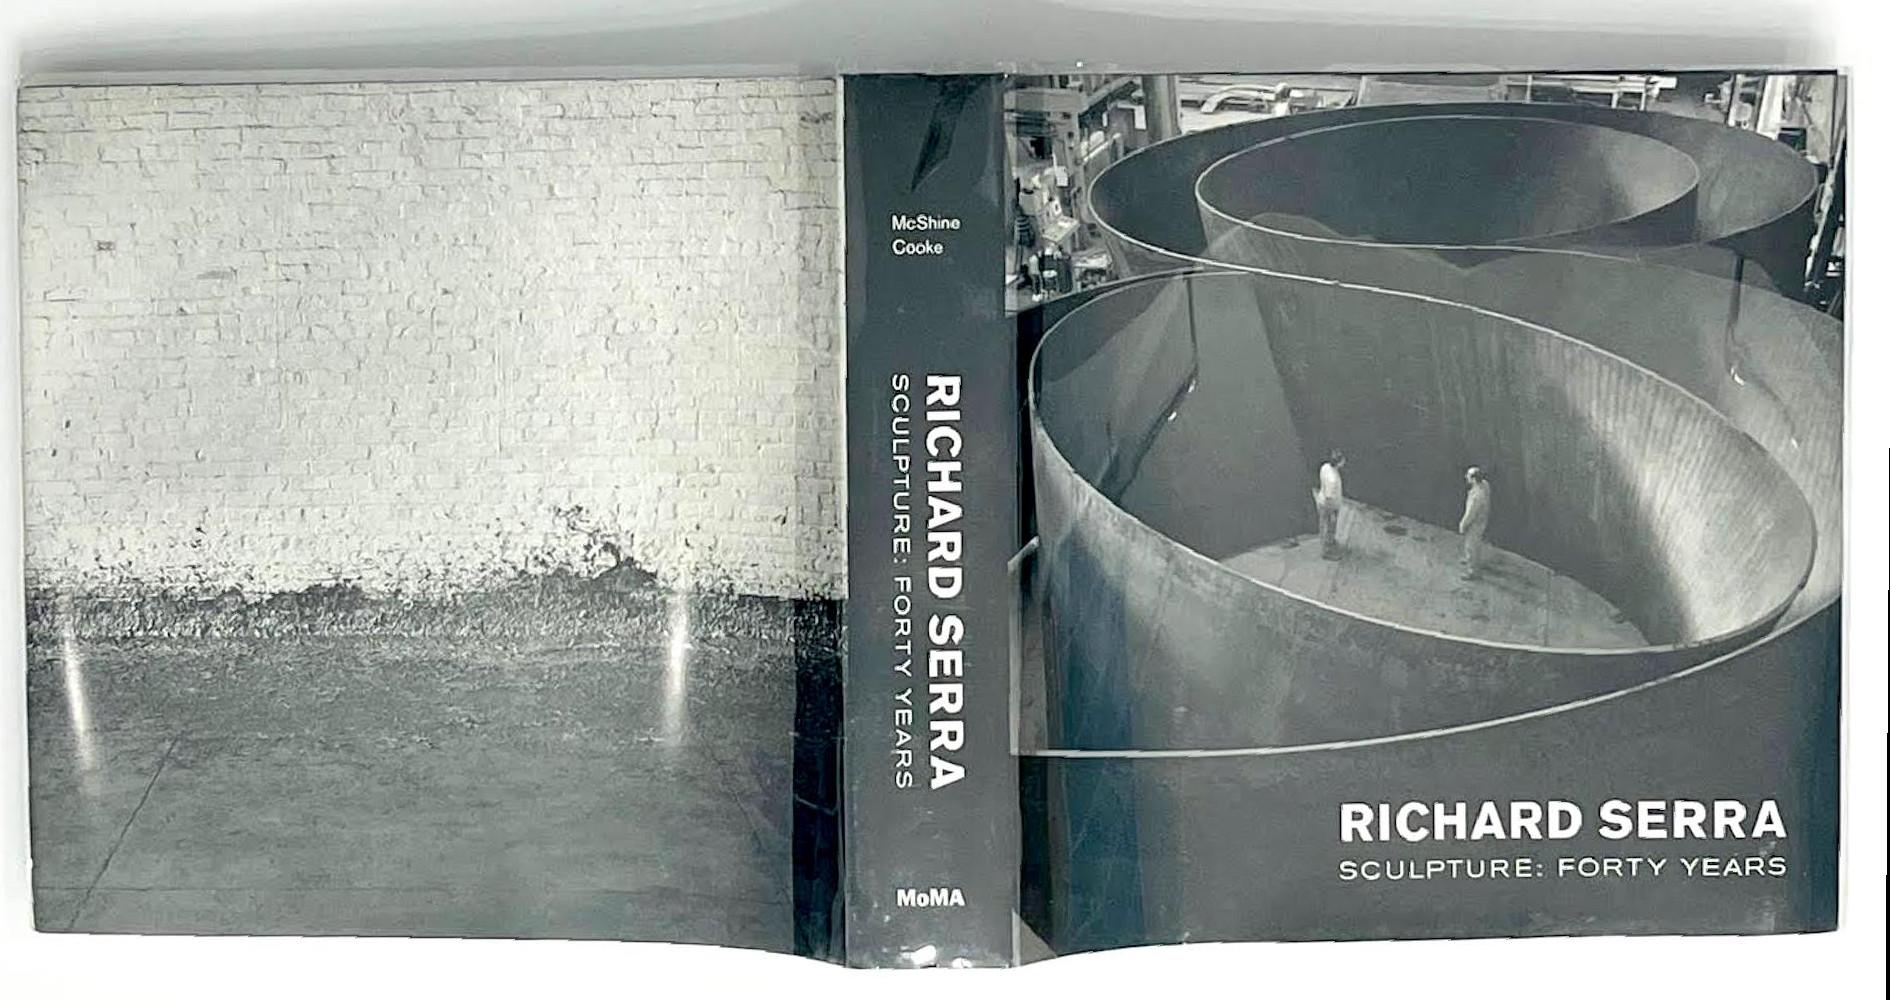 Richard Serra
Sculpture: Forty Years (Hand signed by Richard Serra), 2007
Hardback monograph (Signed by Richard Serra on the title page)
Hand signed with marker by Richard Serra on the title page
10 1/4 × 11 × 2 inches
Unframed
Richard Serra: Forty